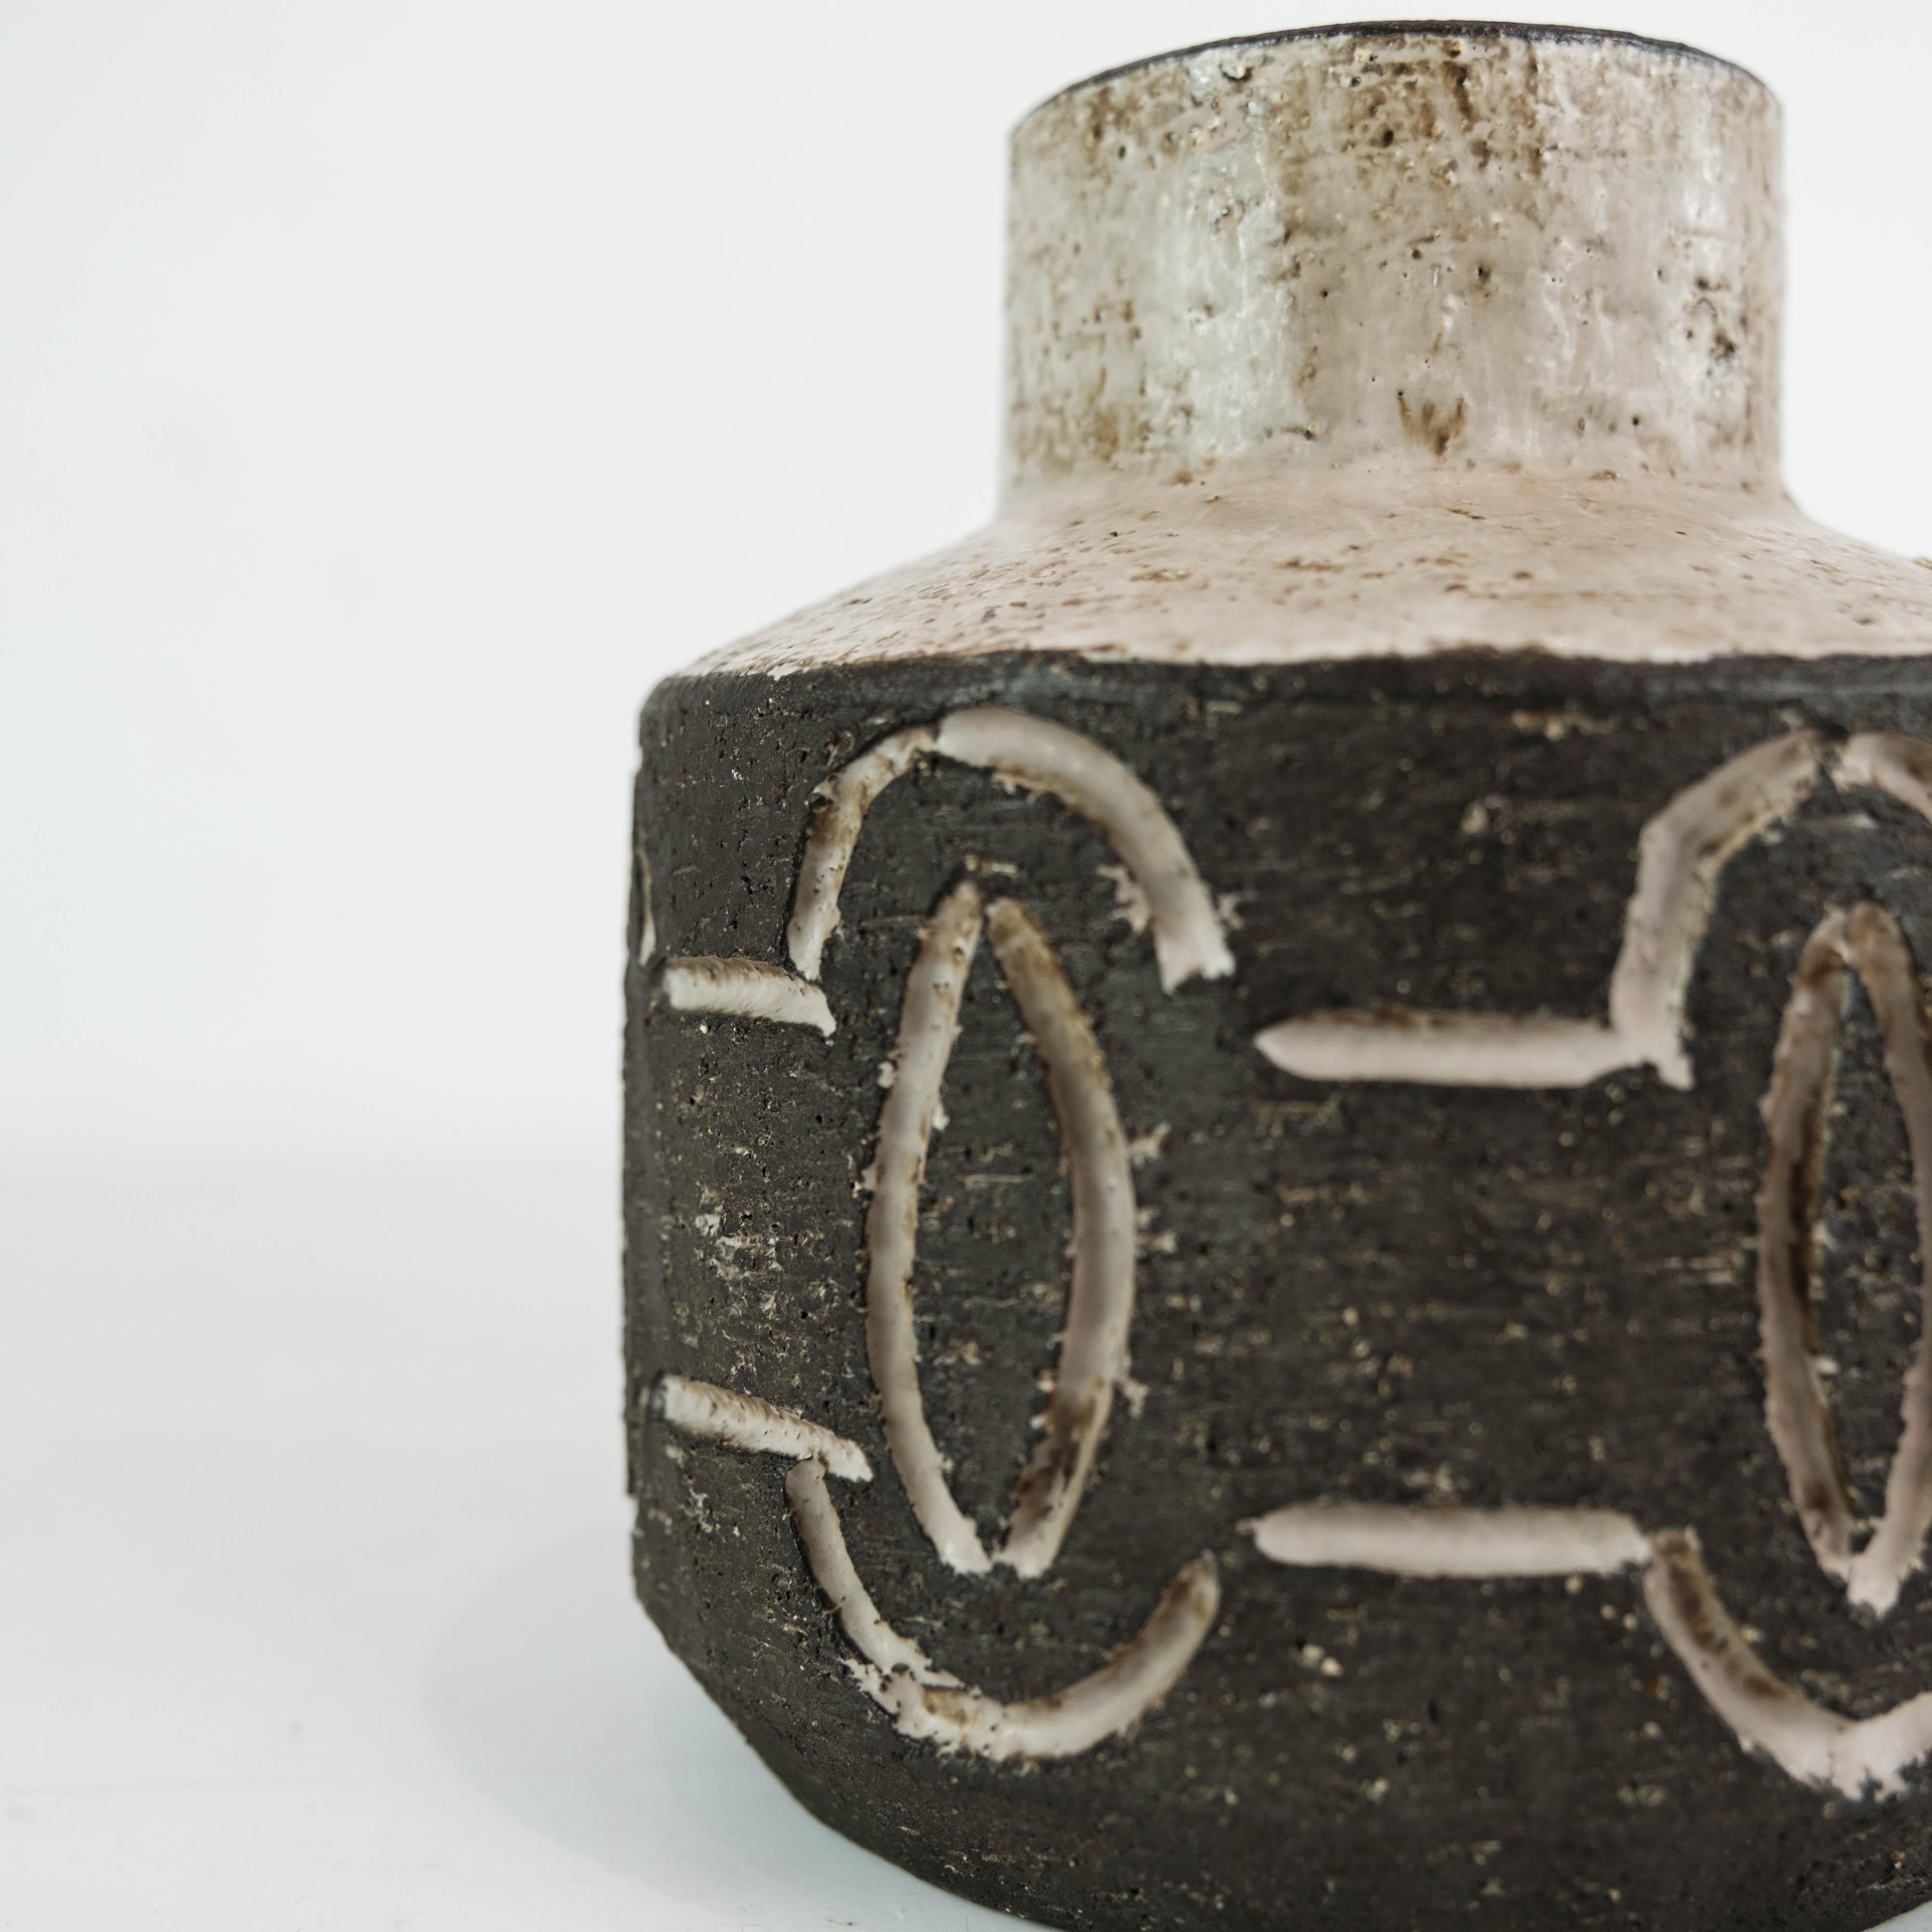 Mid-20th Century Ceramic Vase in Dark Nuances by Loevemose Ceramics from the 1960s